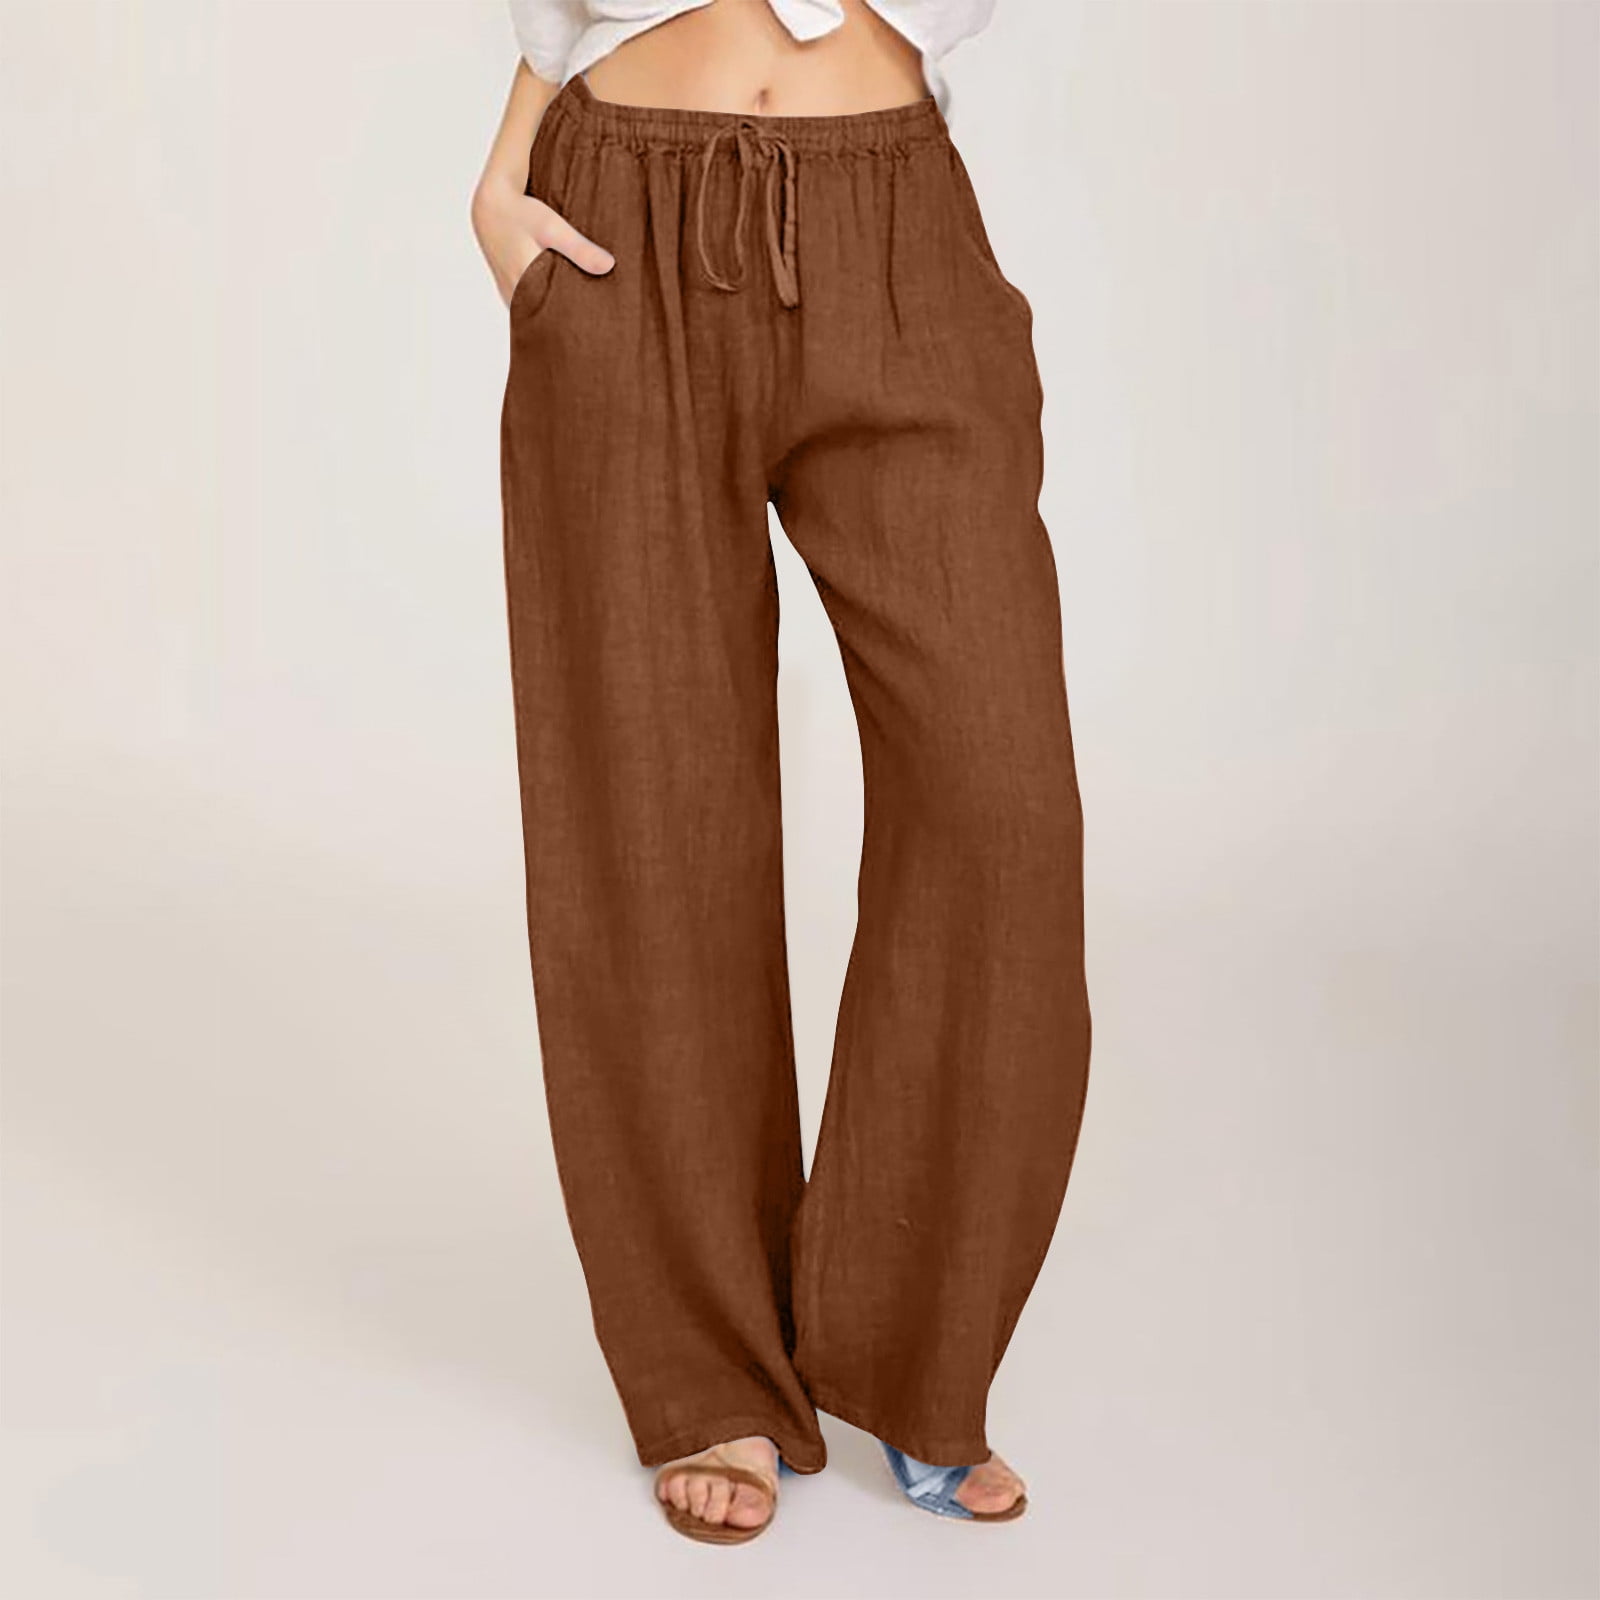 Buy Chocolate Stretch Linen Pants online - Etcetera